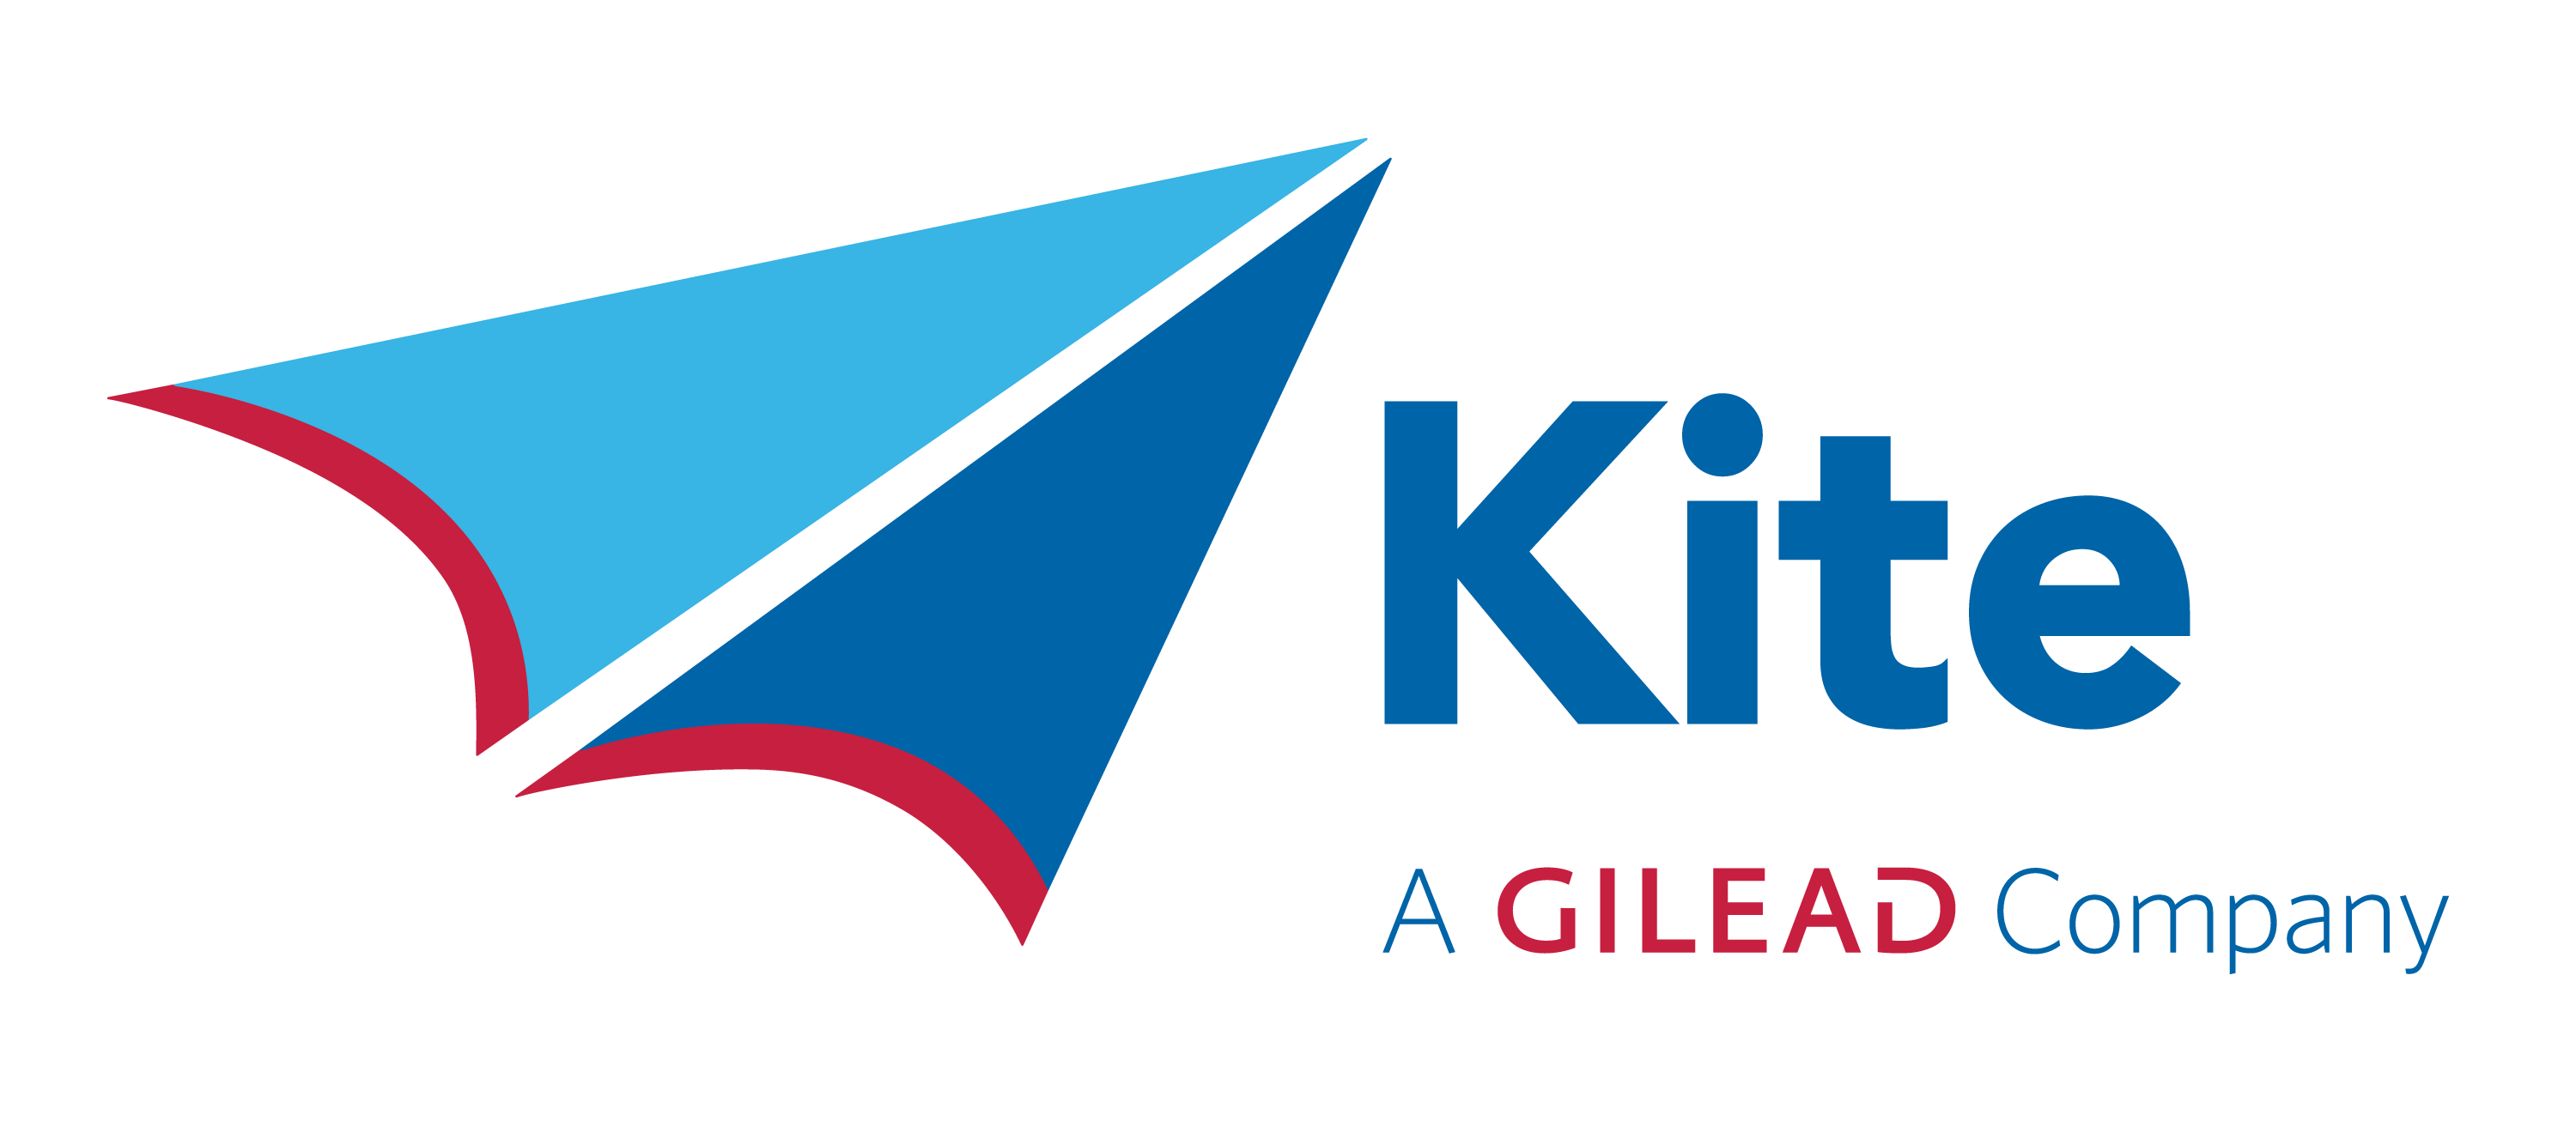 Gilead & Kite a Gilead Company